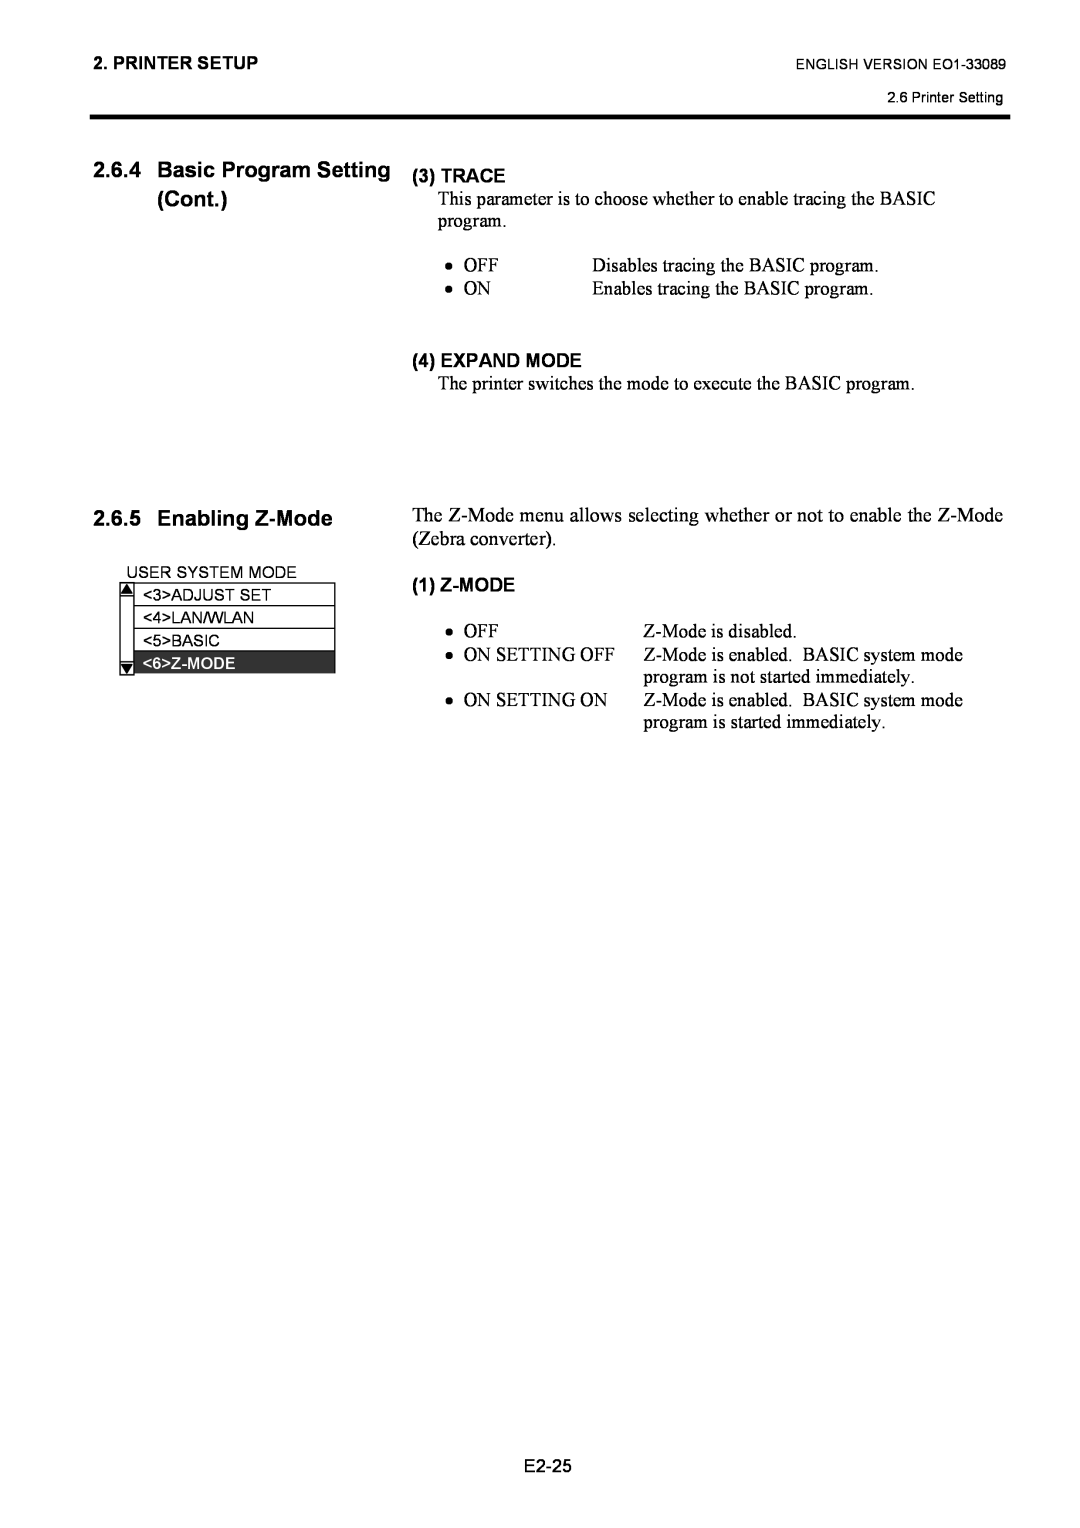 Toshiba B-EX4T1 manual Basic Program Setting Cont 2.6.5 Enabling Z-Mode, Trace, Expand Mode 